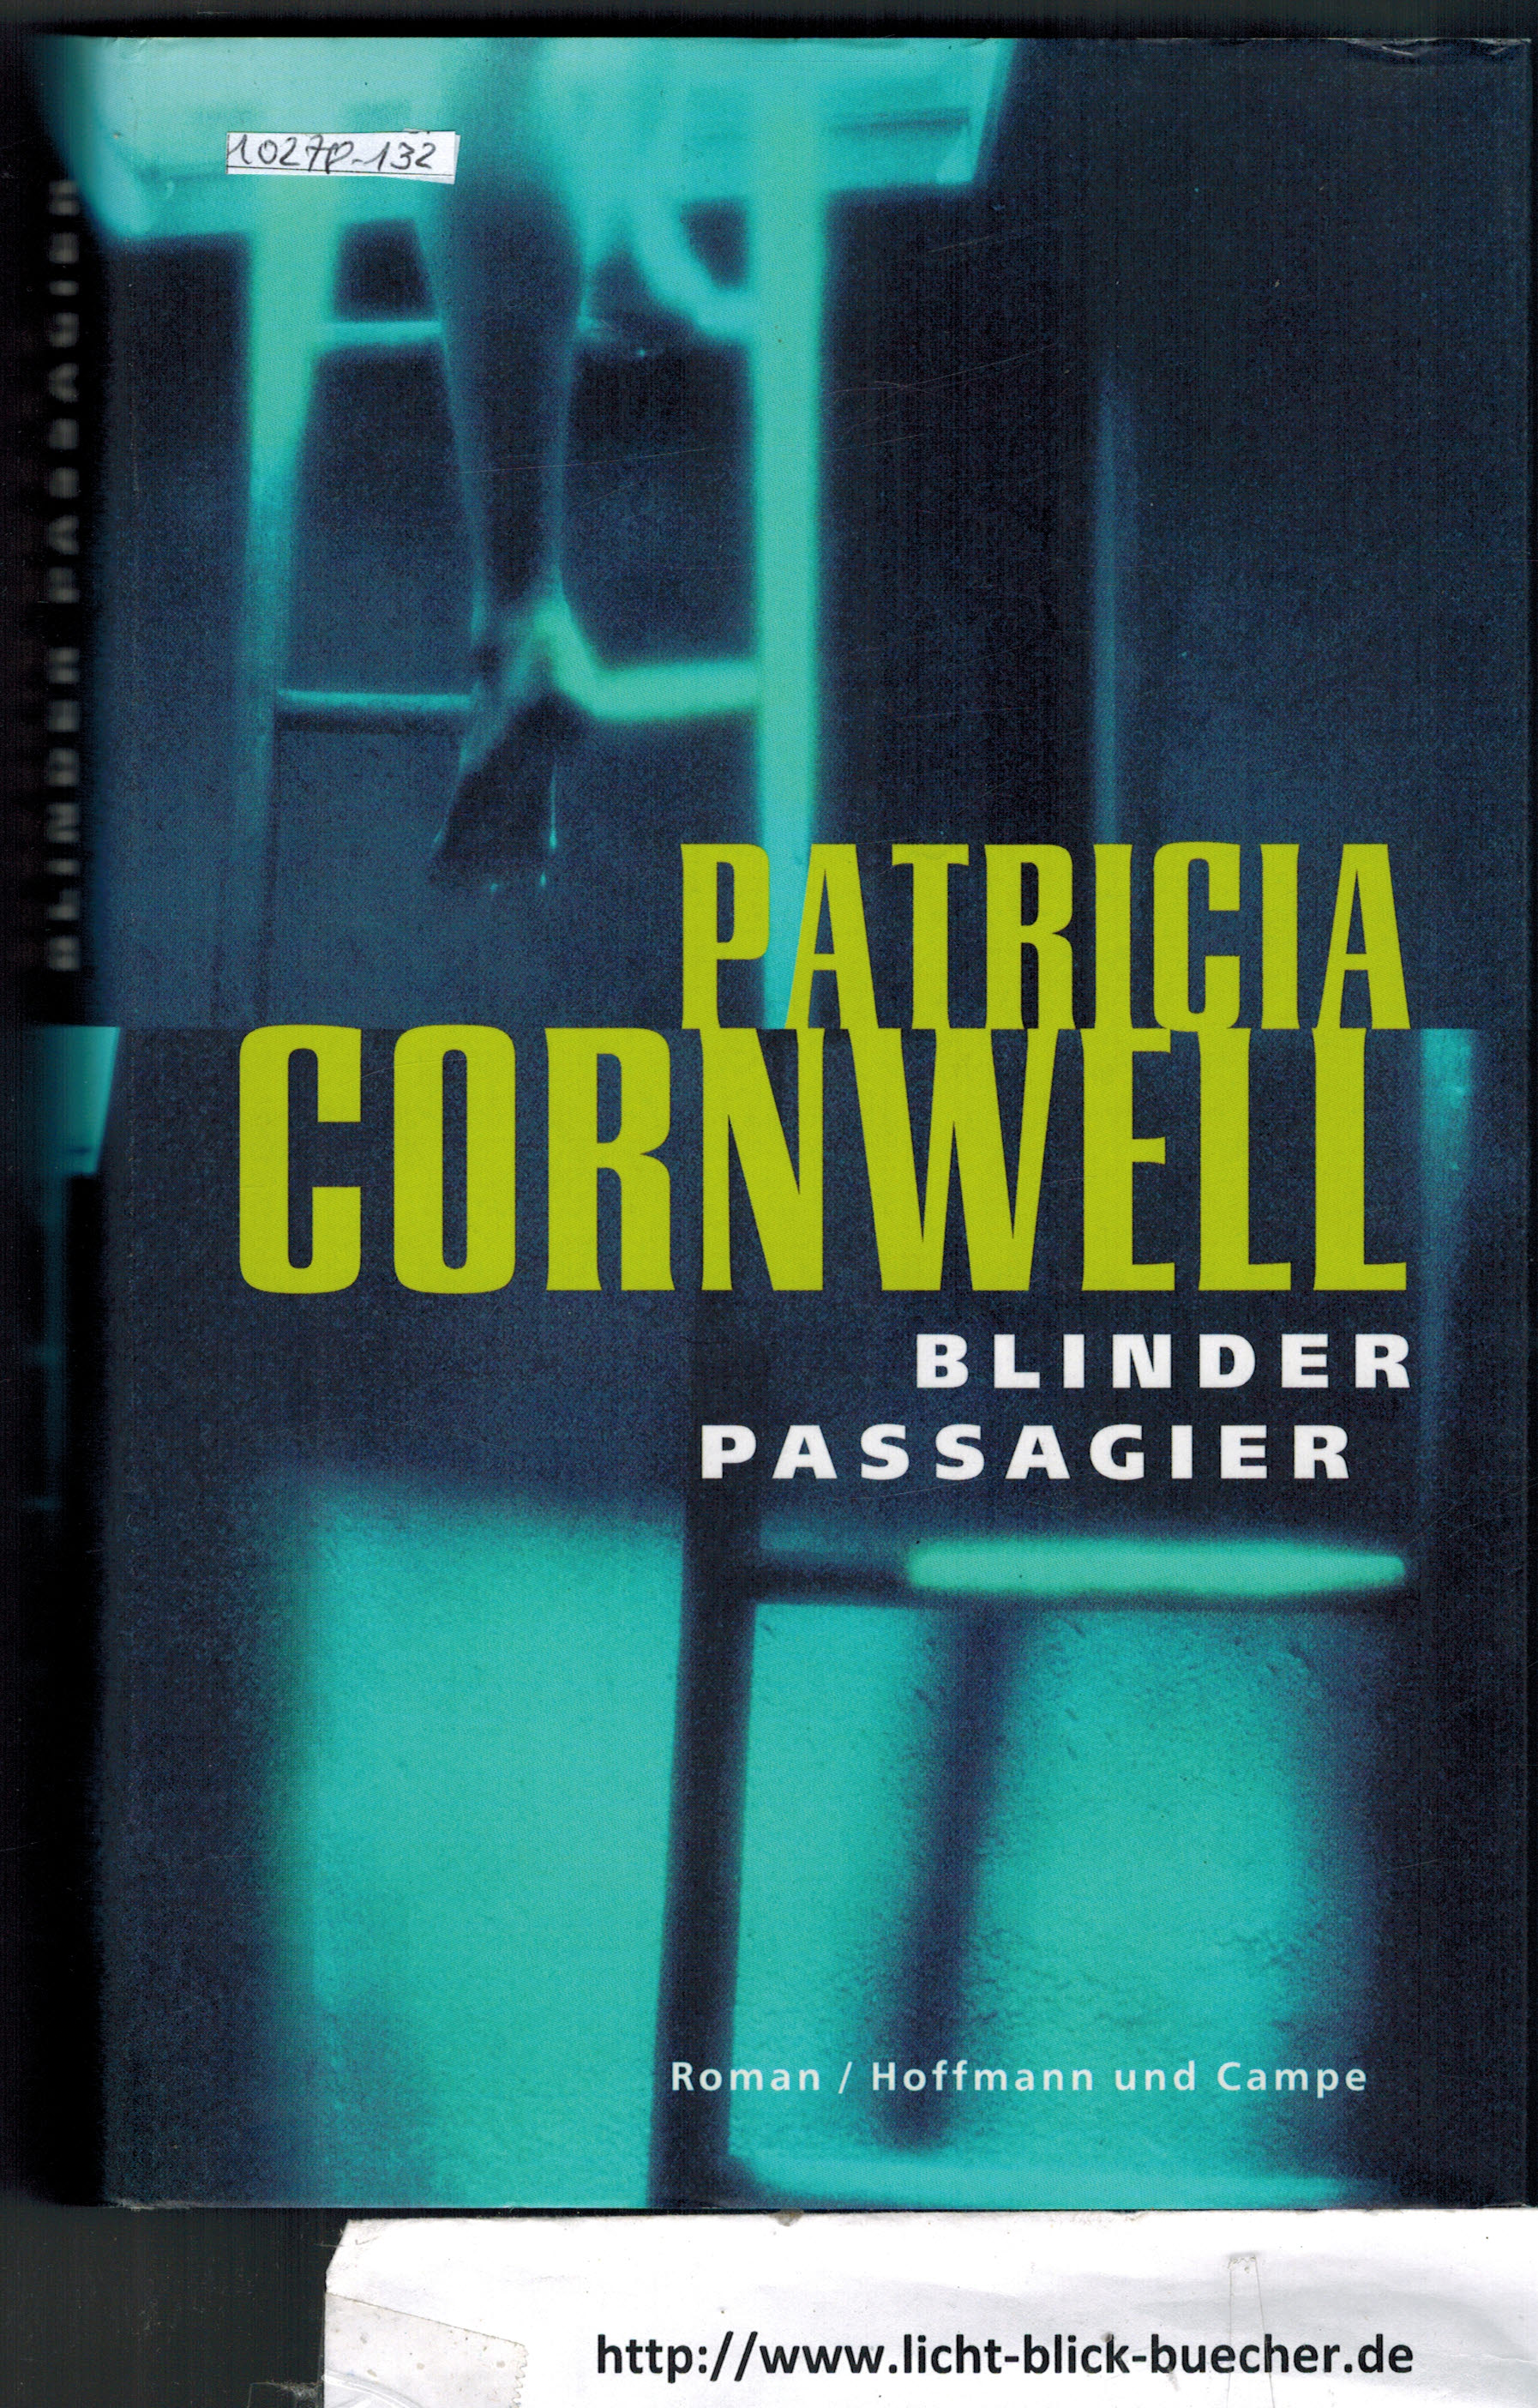 Blinder Passagier Patricia Cornwell